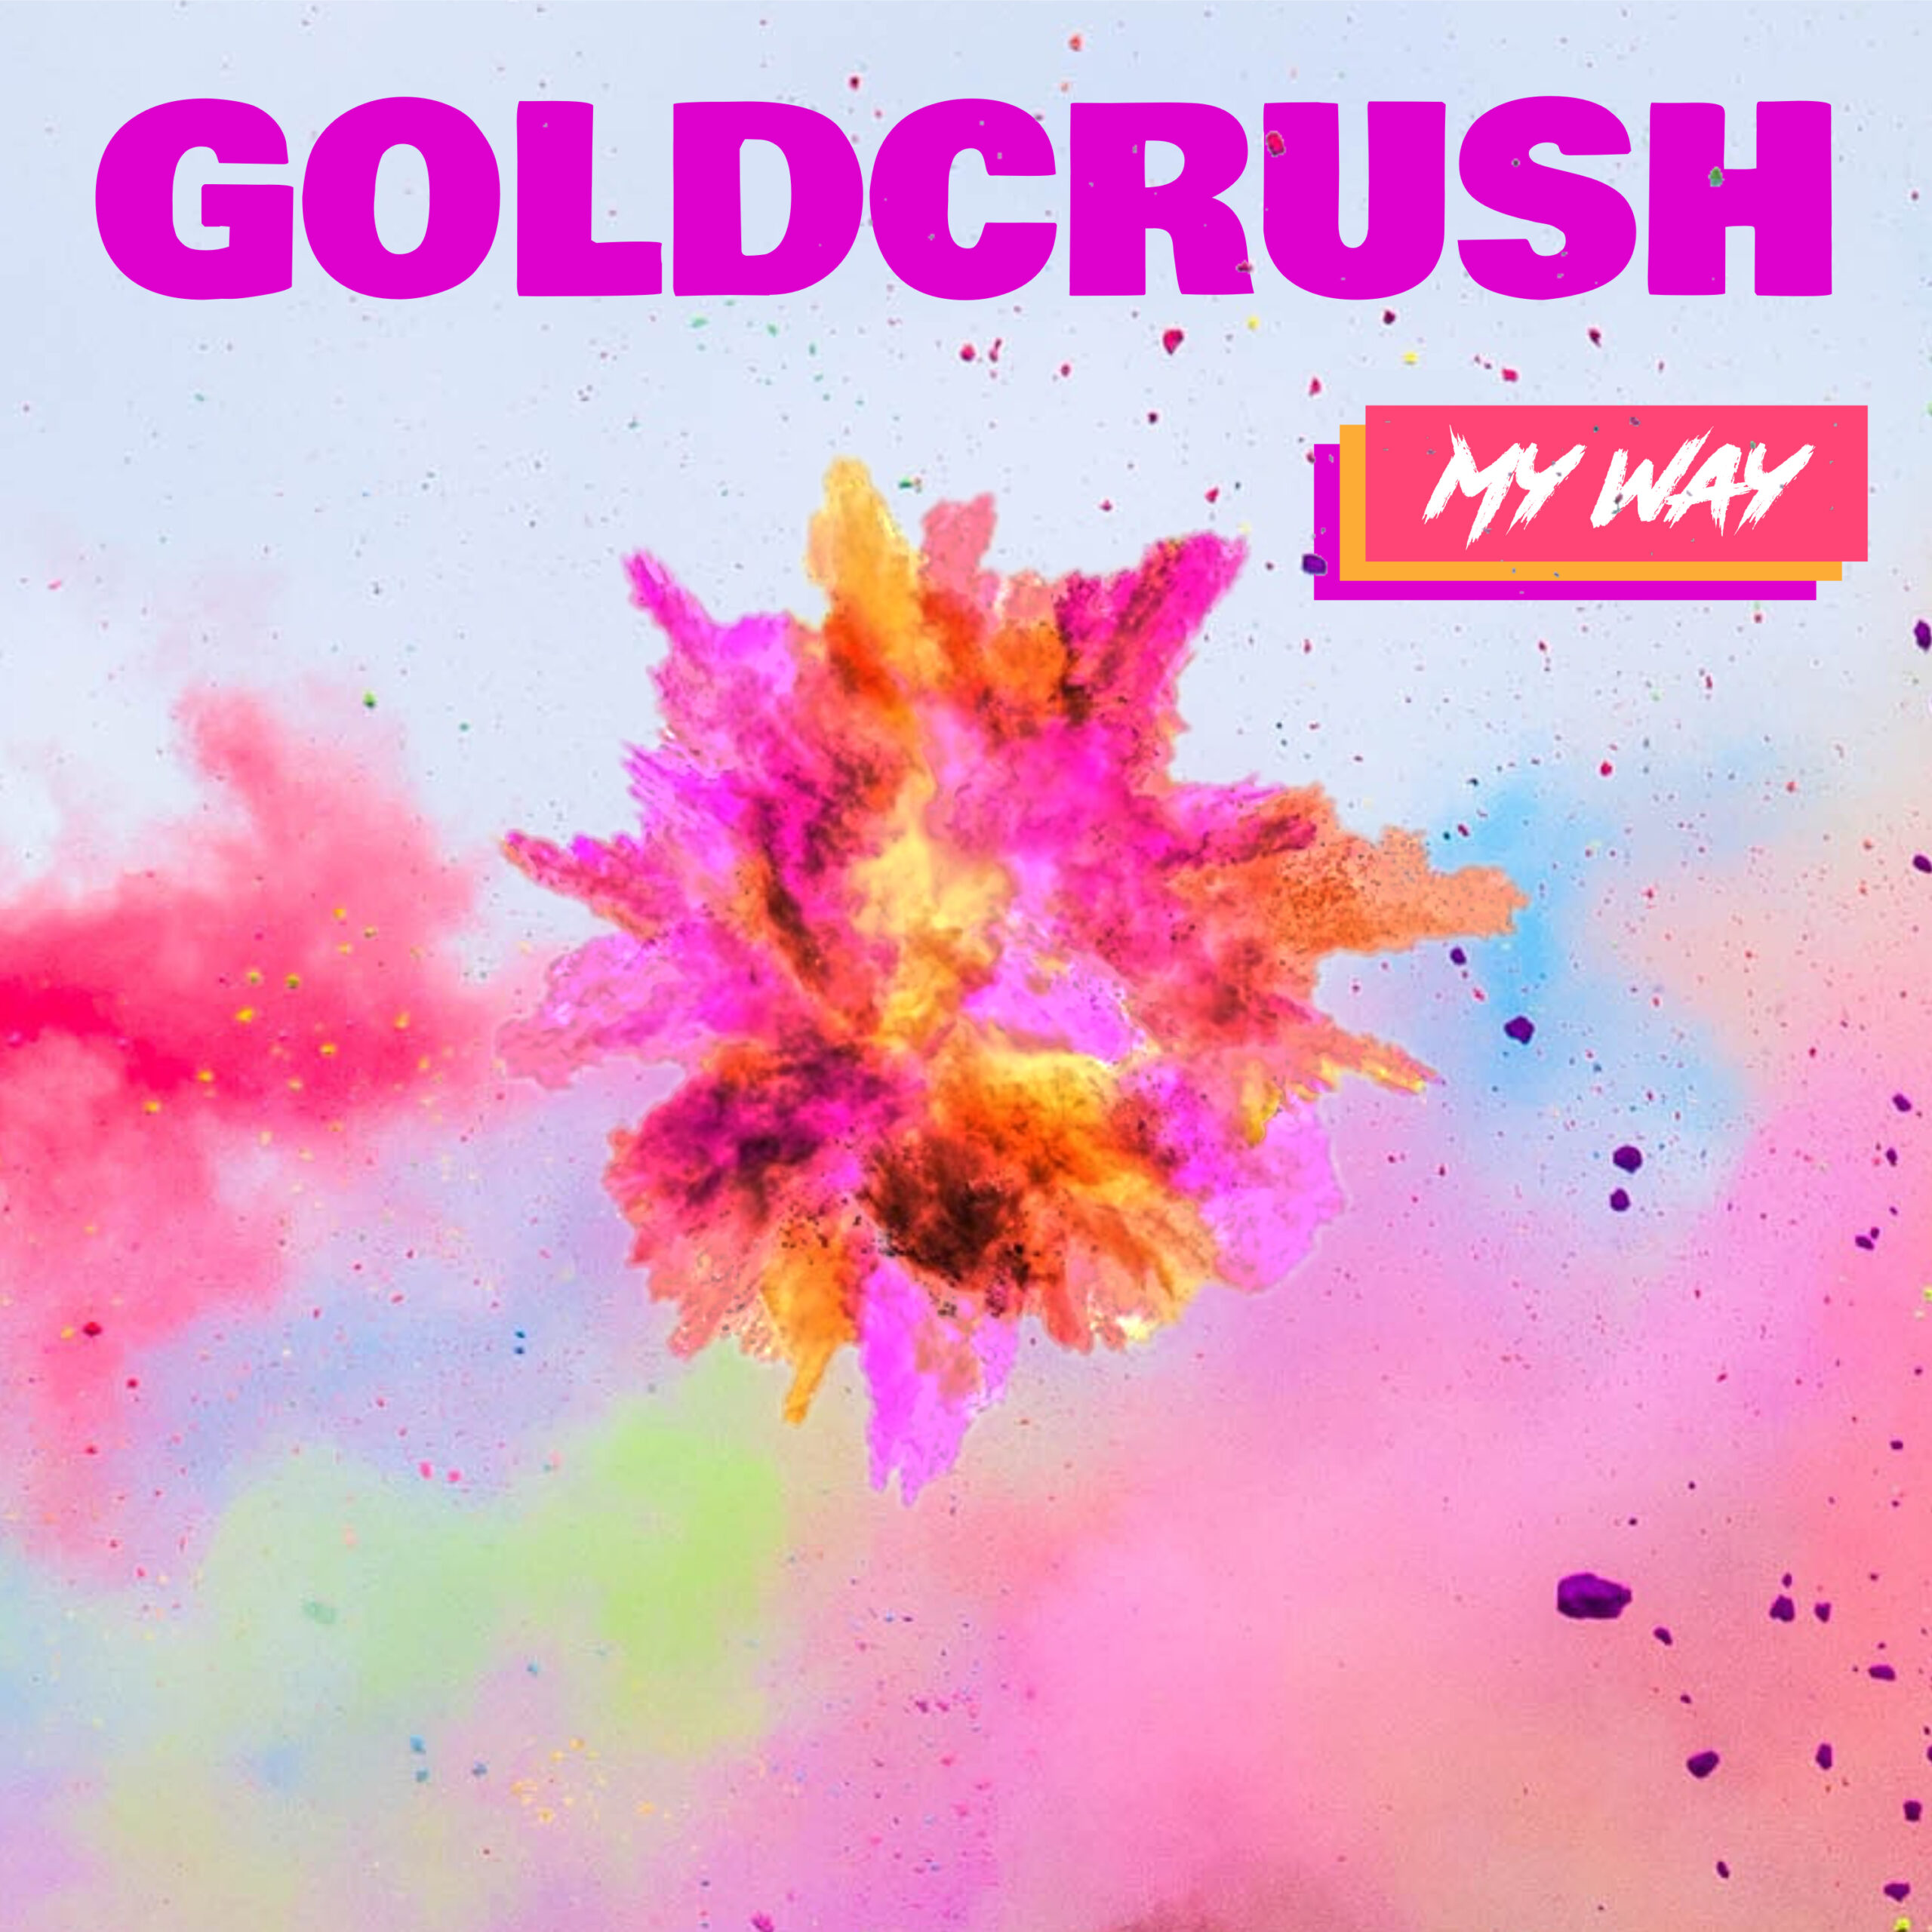 Goldcrush my way single artwork